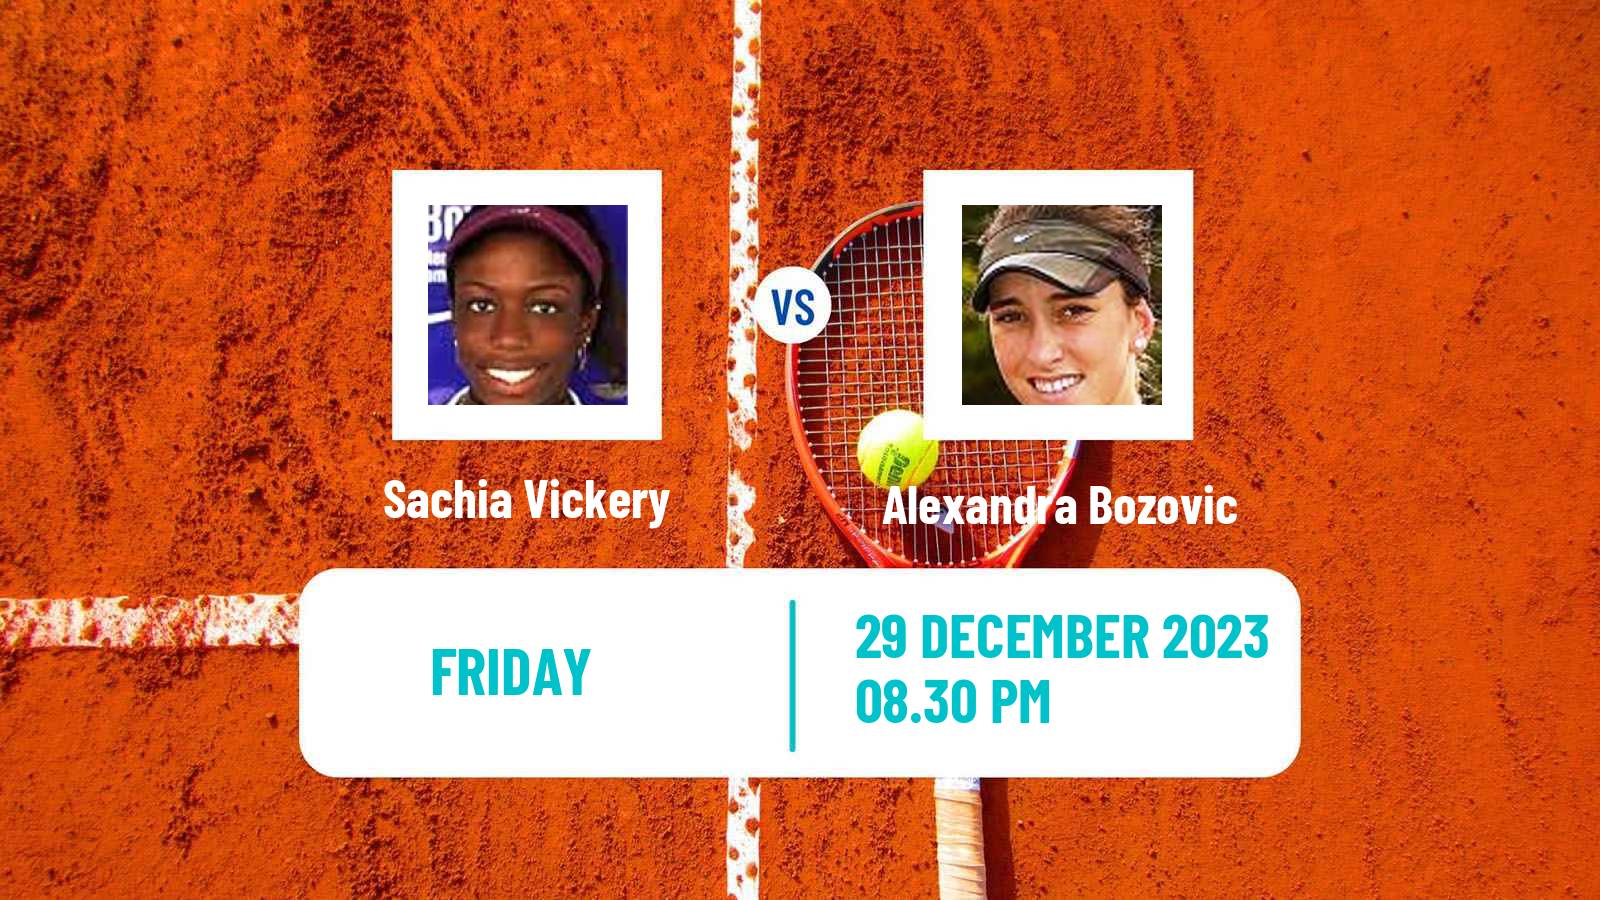 Tennis WTA Auckland Sachia Vickery - Alexandra Bozovic